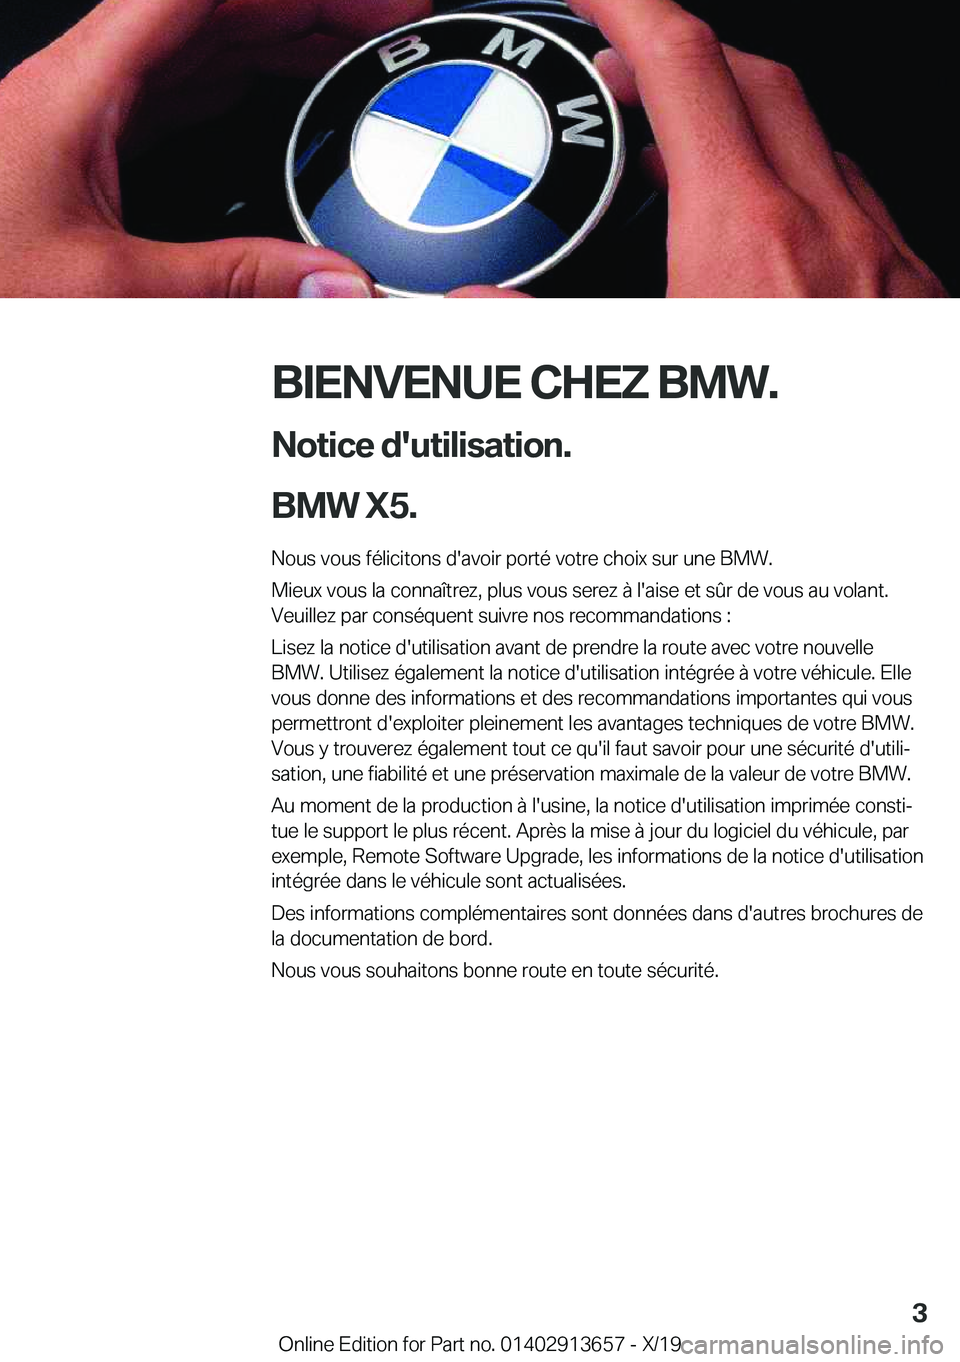 BMW X5 2020  Notices Demploi (in French) �B�I�E�N�V�E�N�U�E��C�H�E�Z��B�M�W�.�N�o�t�i�c�e��d�'�u�t�i�l�i�s�a�t�i�o�n�.
�B�M�W��X�5�. �N�o�u�s��v�o�u�s��f�é�l�i�c�i�t�o�n�s��d�'�a�v�o�i�r��p�o�r�t�é��v�o�t�r�e��c�h�o�i�x�